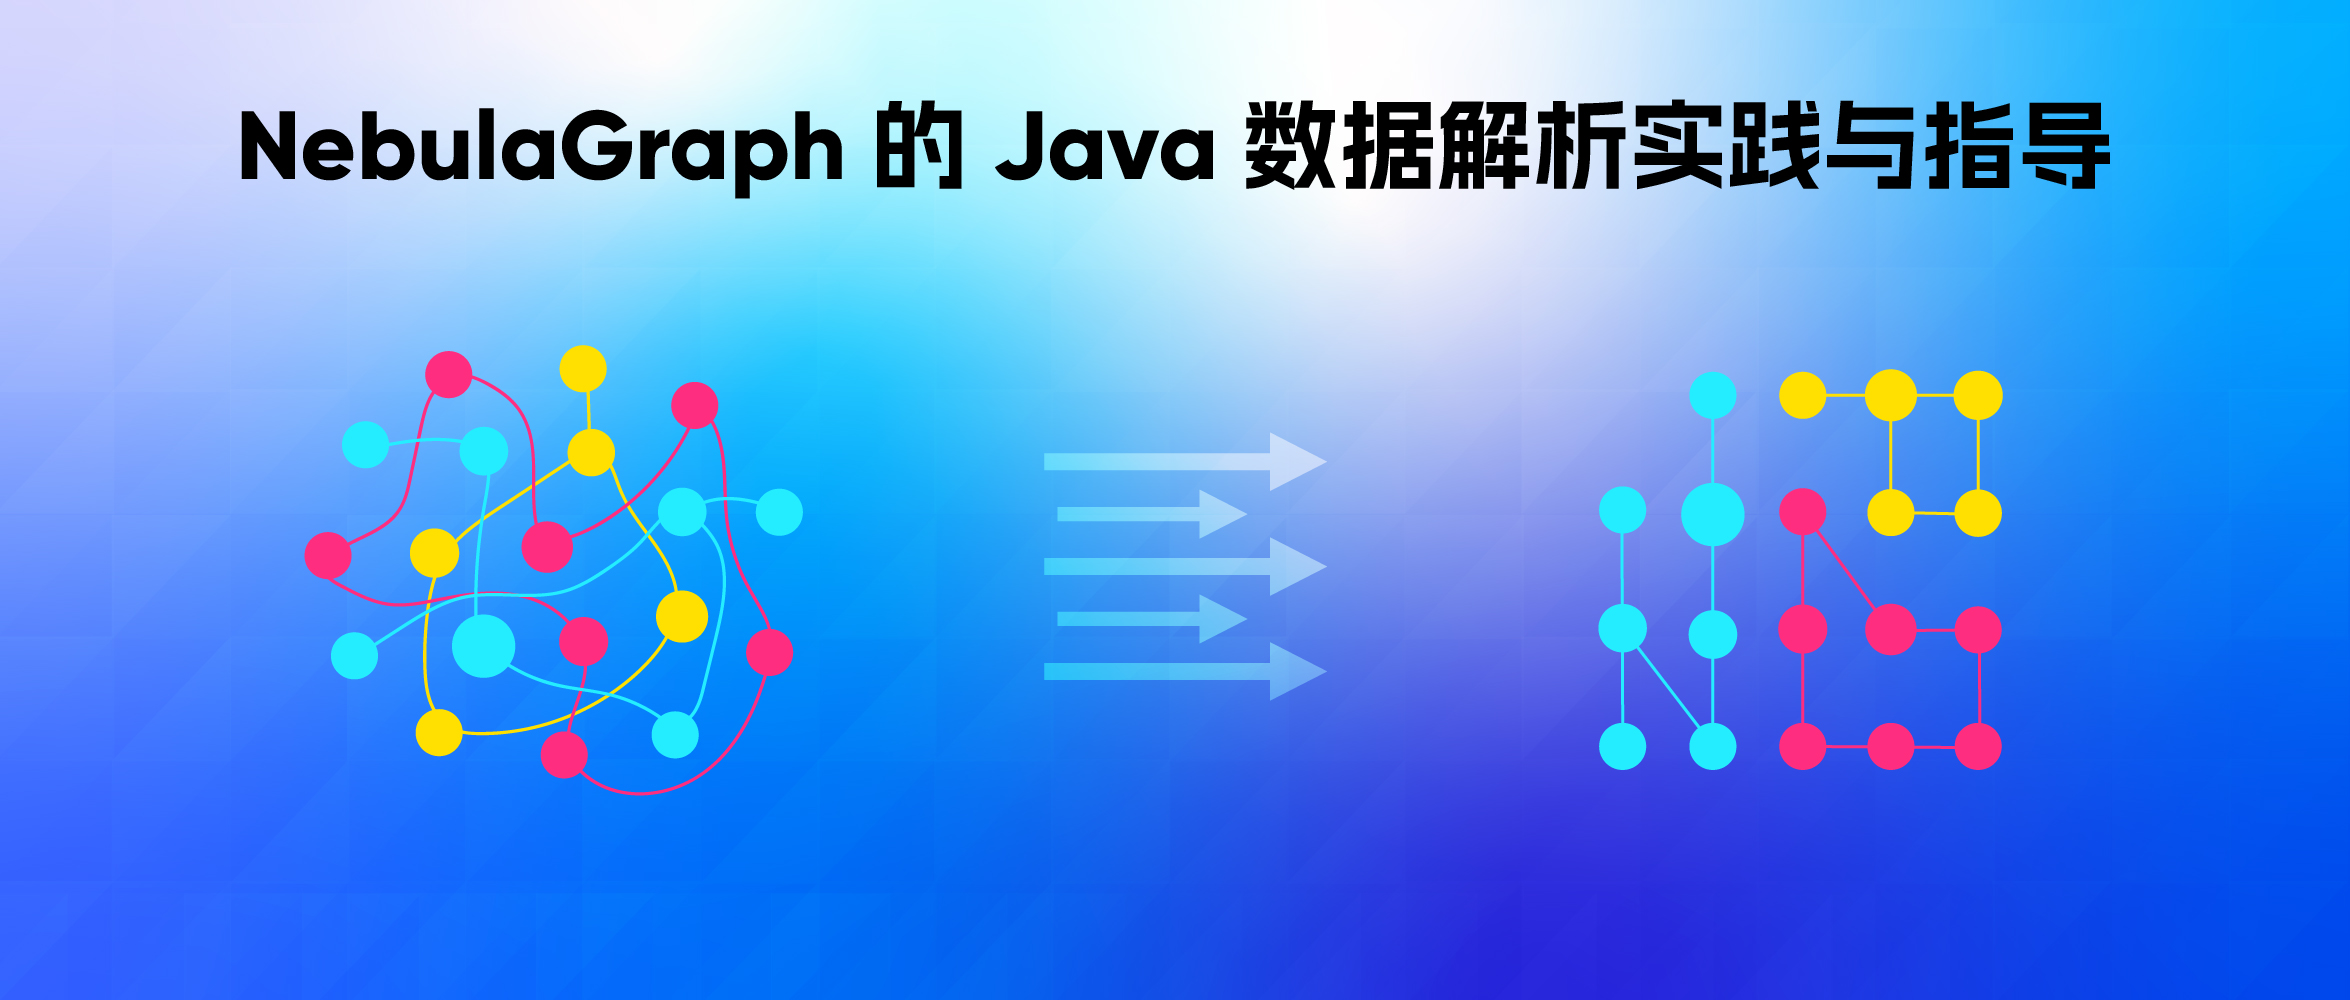 NebulaGraph 的 Java 数据解析实践与指导